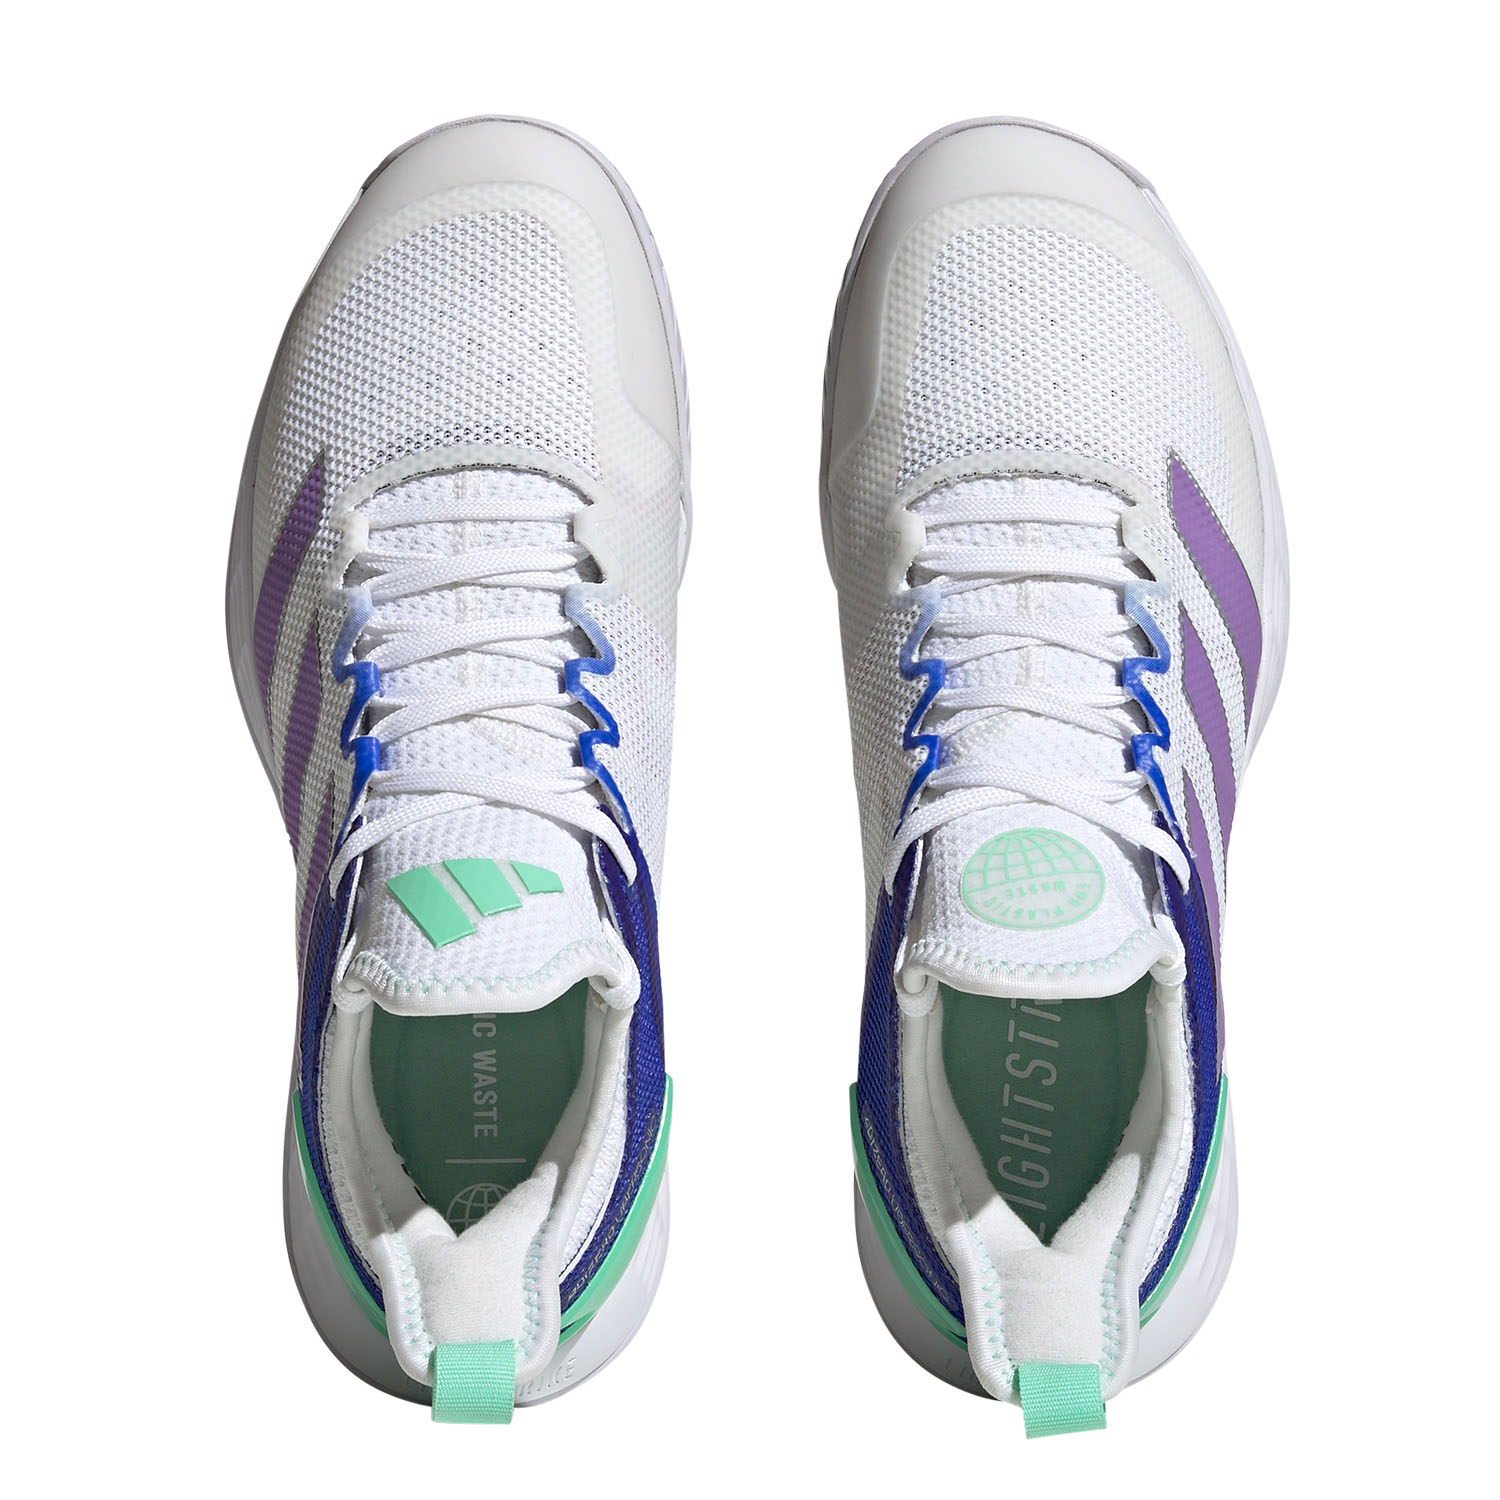 adidas Adizero Ubersonic 4 - Ftwr White/Violet Fusion/Silver Met